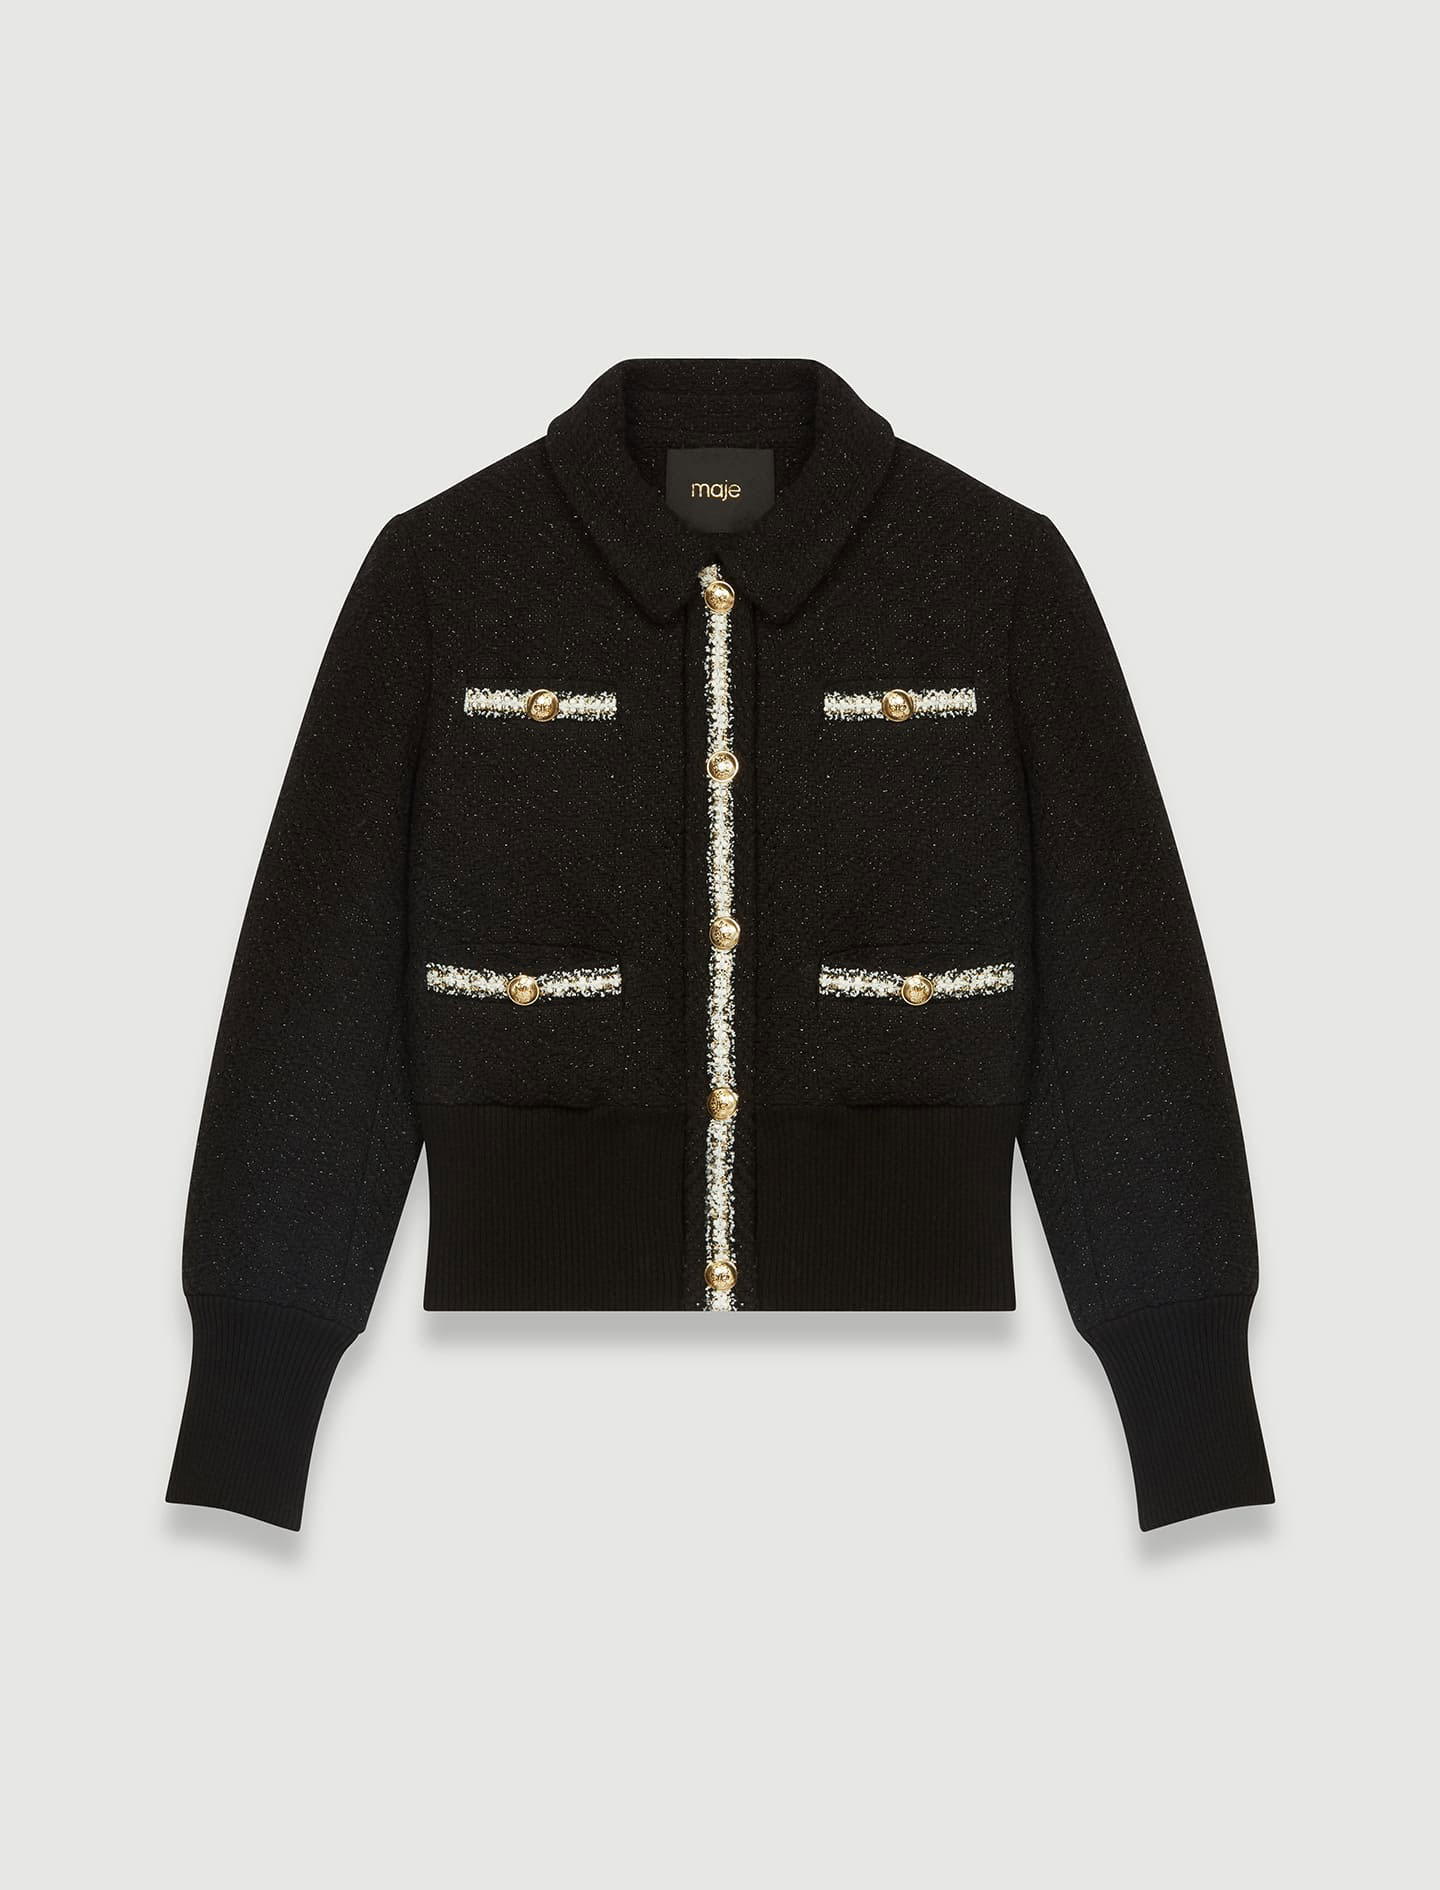 120BLOPPY Contrasting tweed-style jacket - Coats & Jackets - Maje.com